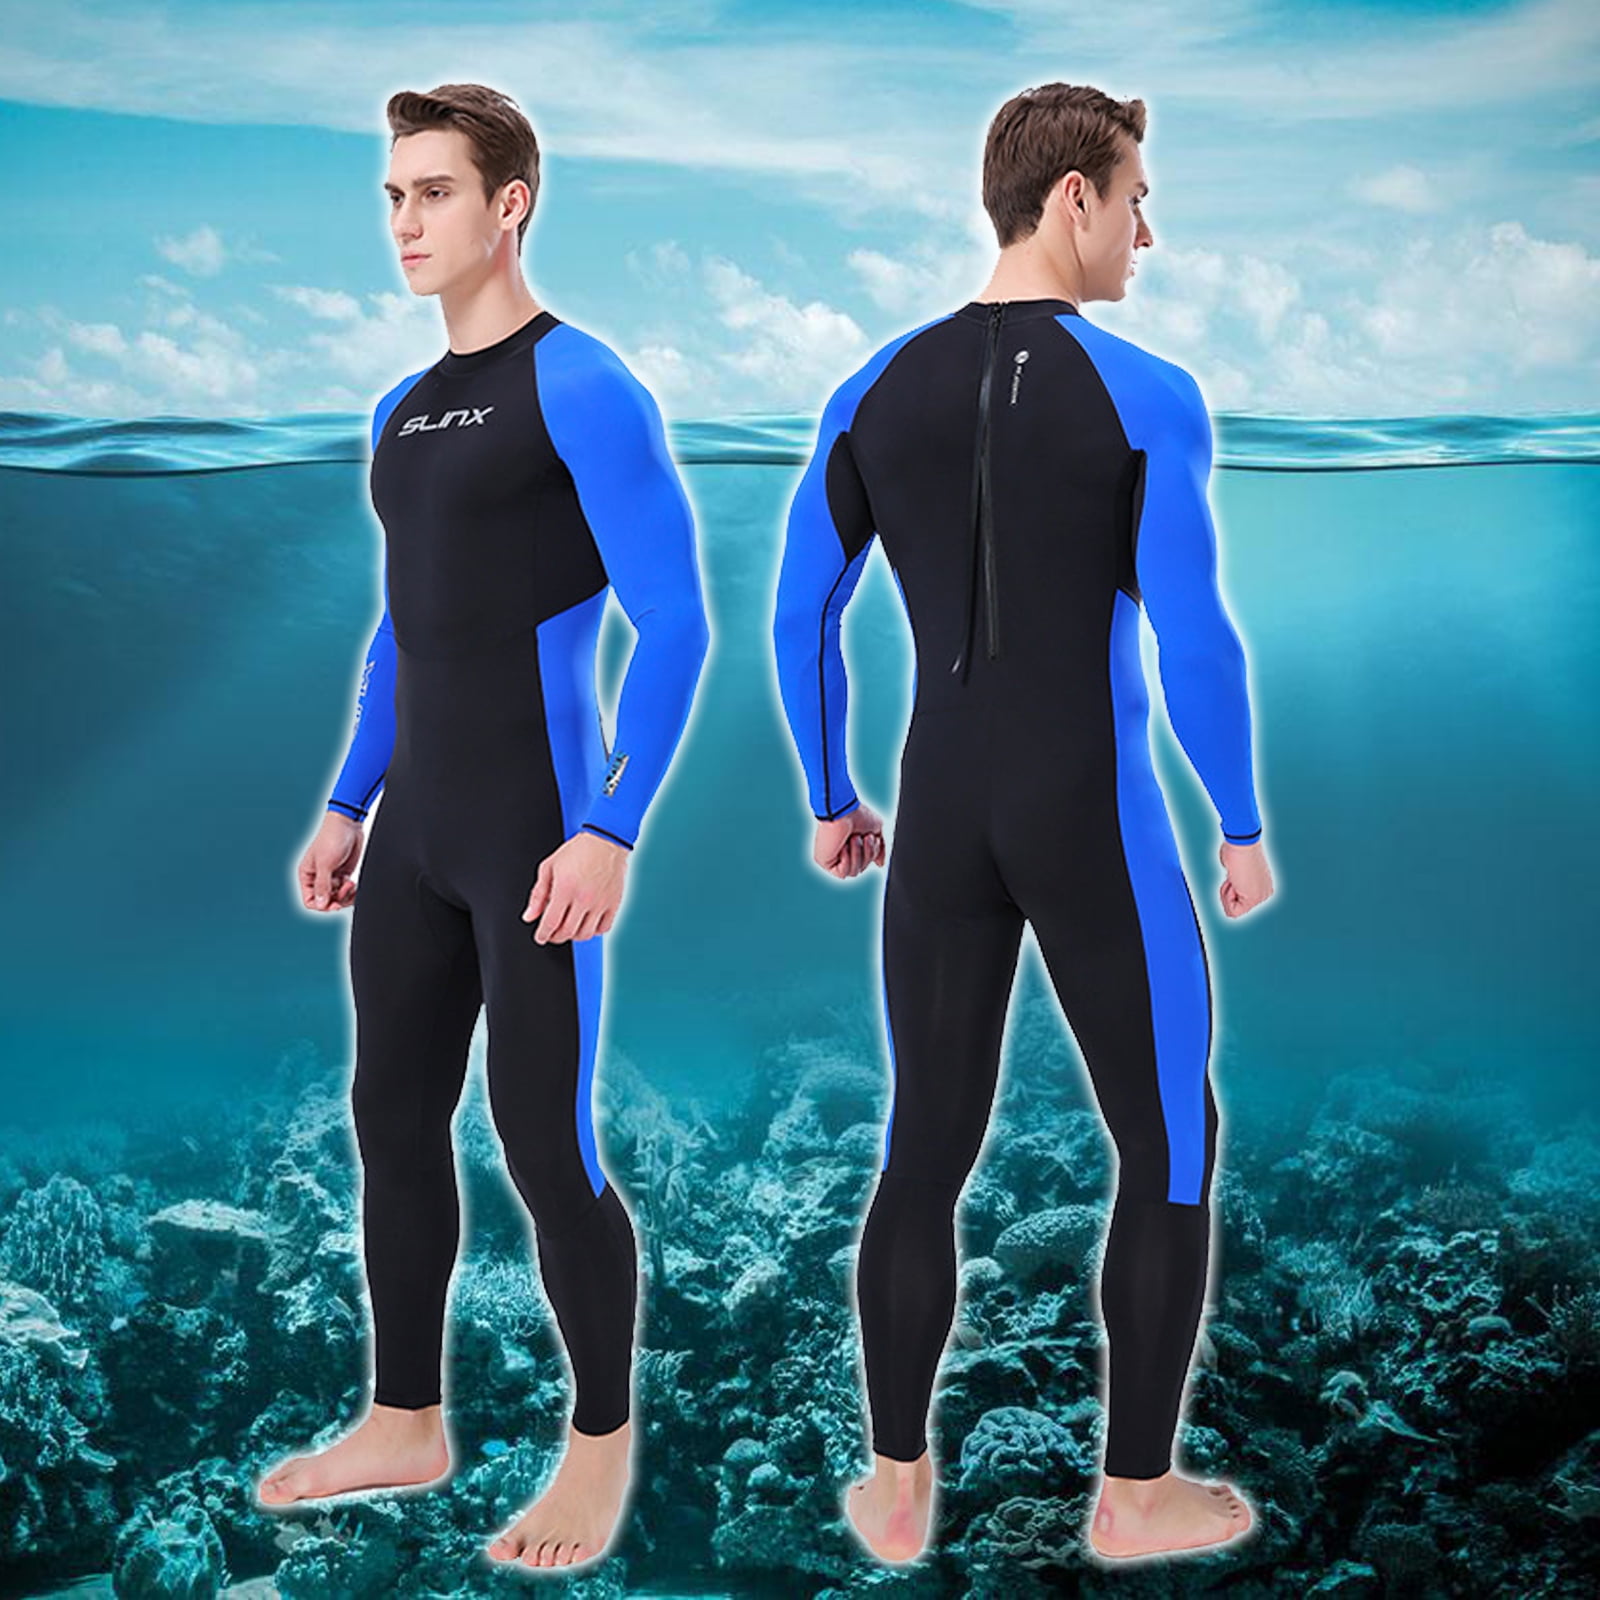 Men WetSuit 3mm Full Body Suit One-piece Diving Suit Surf Snorkeling Swimwear